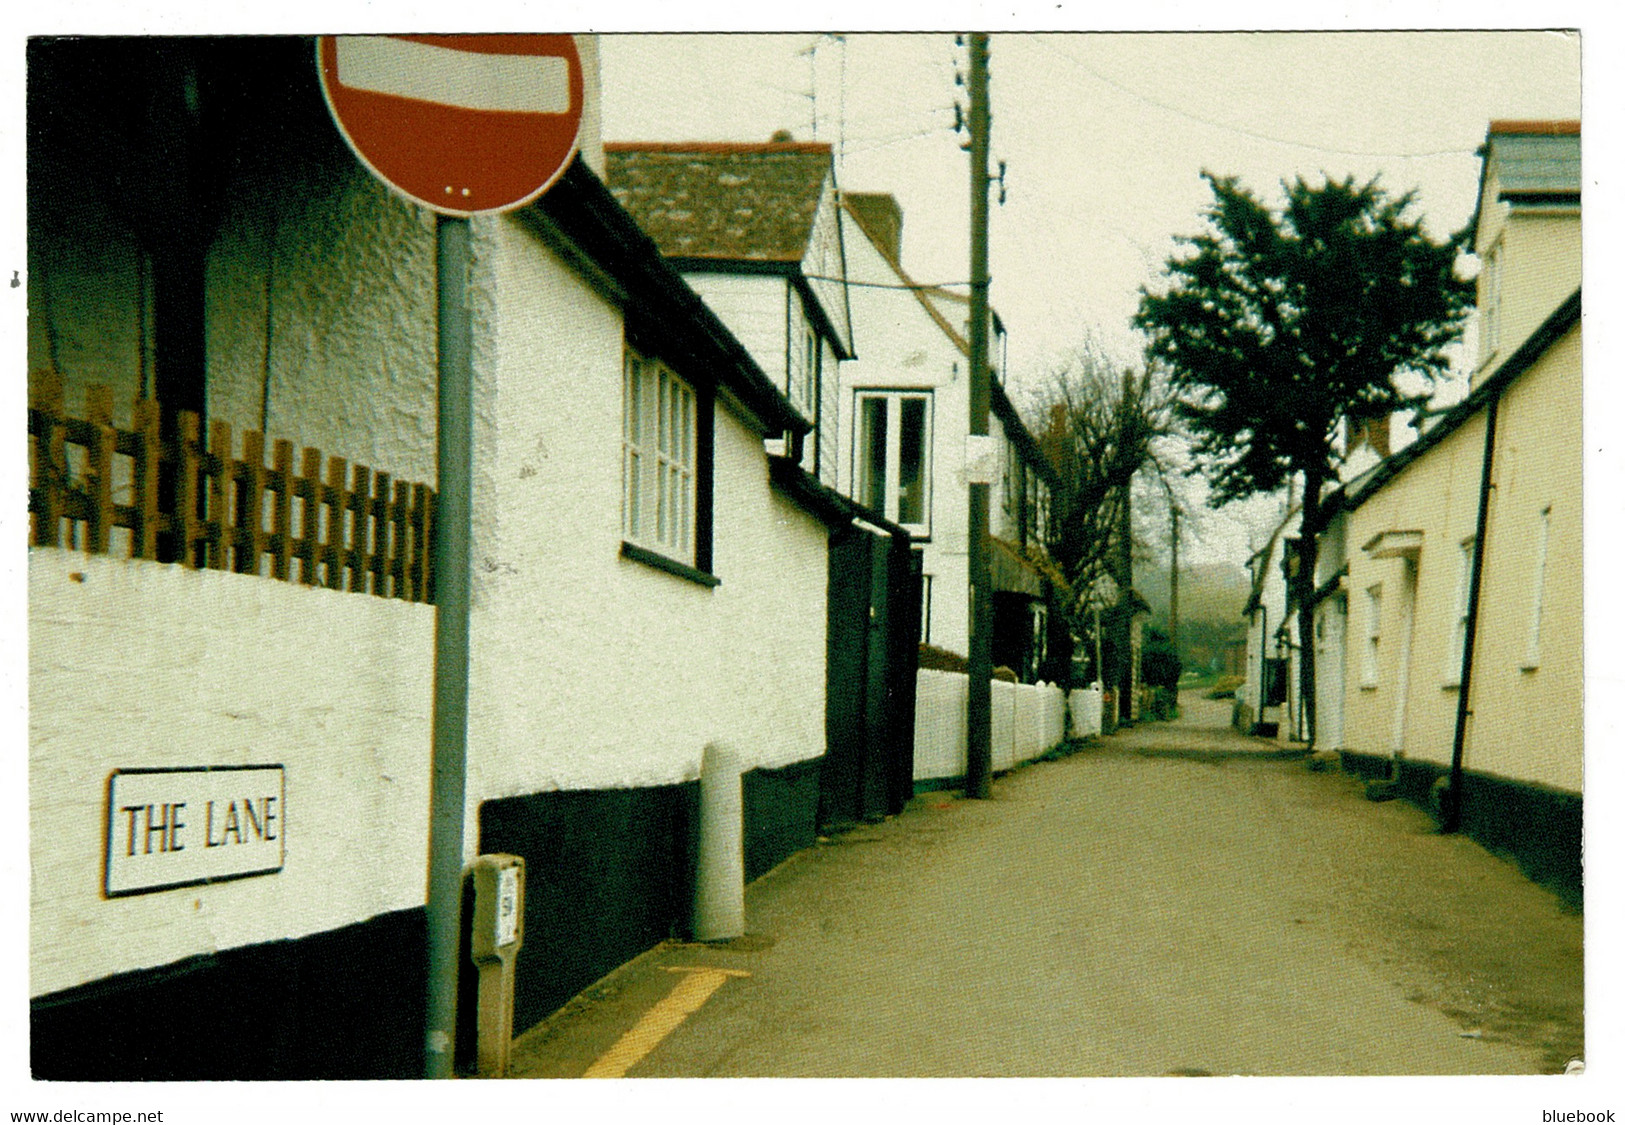 Ref 1444 - 1998 Postcard - The Lane - West Mersea Near Colchester Essex - Colchester